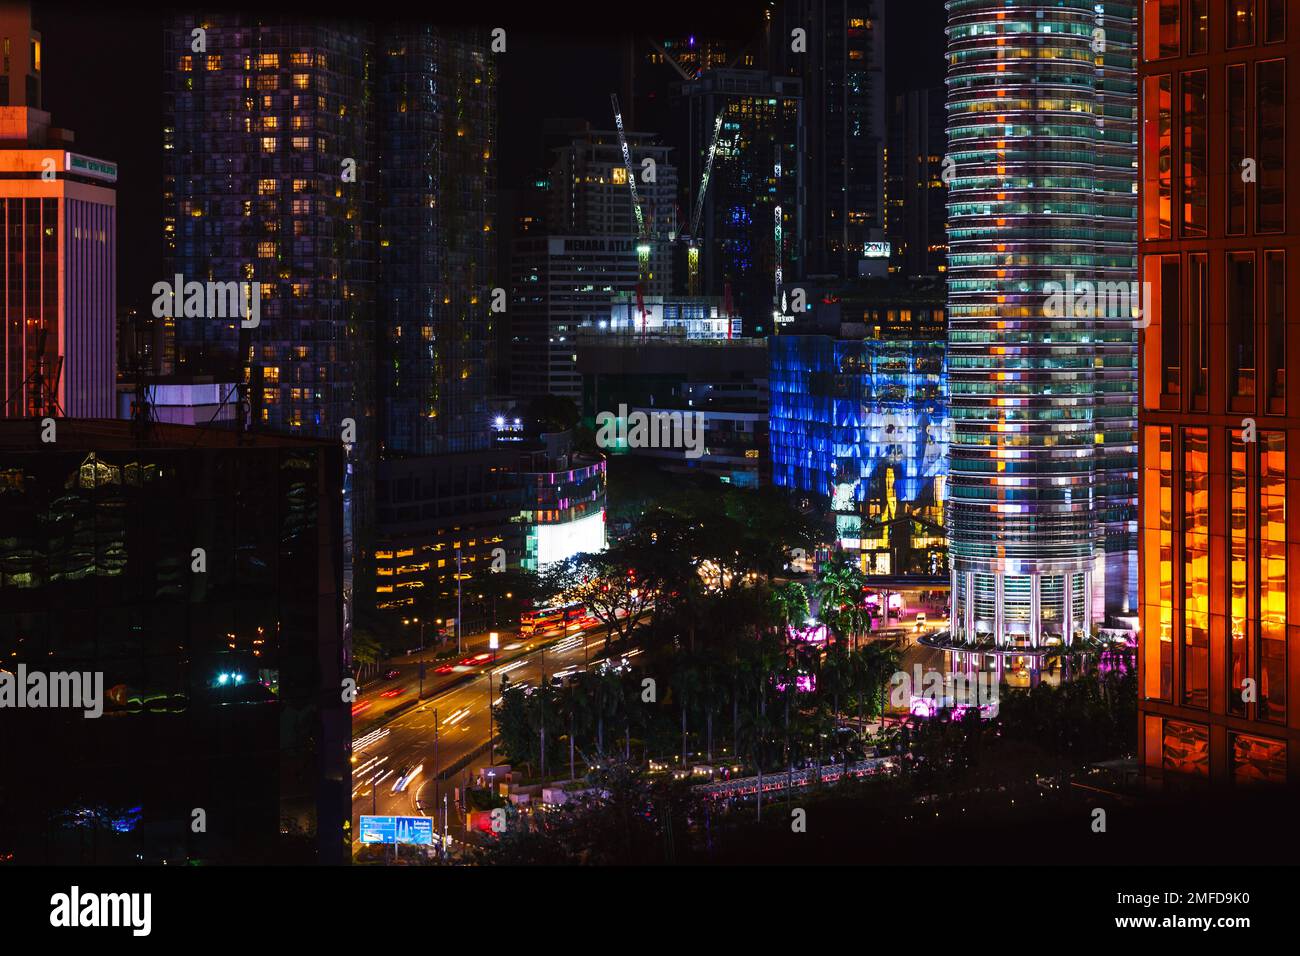 Kuala Lumpur, Malaysia - 28. November 2019: Kuala Lumpur in der Innenstadt bei Nacht, moderne Hochhäuser mit farbenfroher Beleuchtung Stockfoto